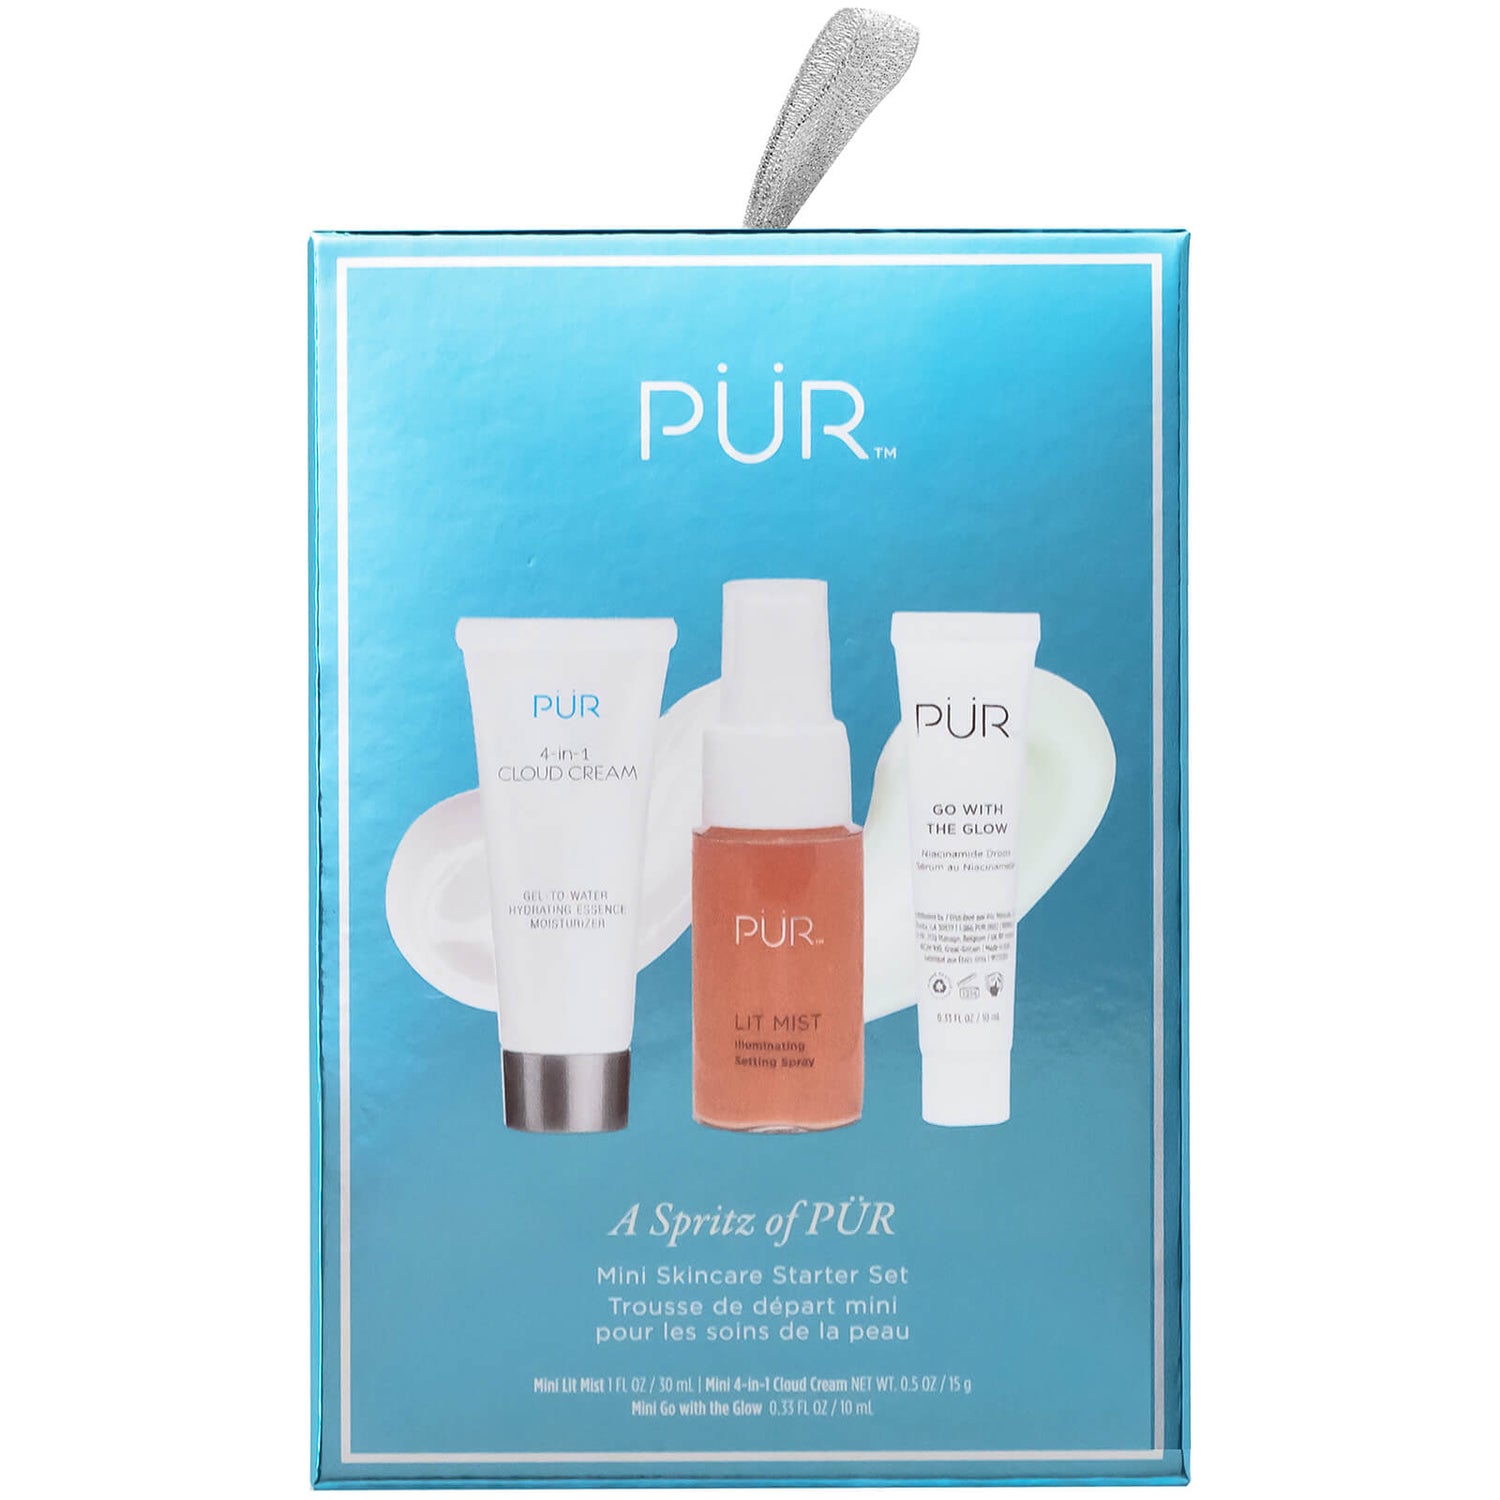 A Spritz of PÜR Mini Skincare Starter Set